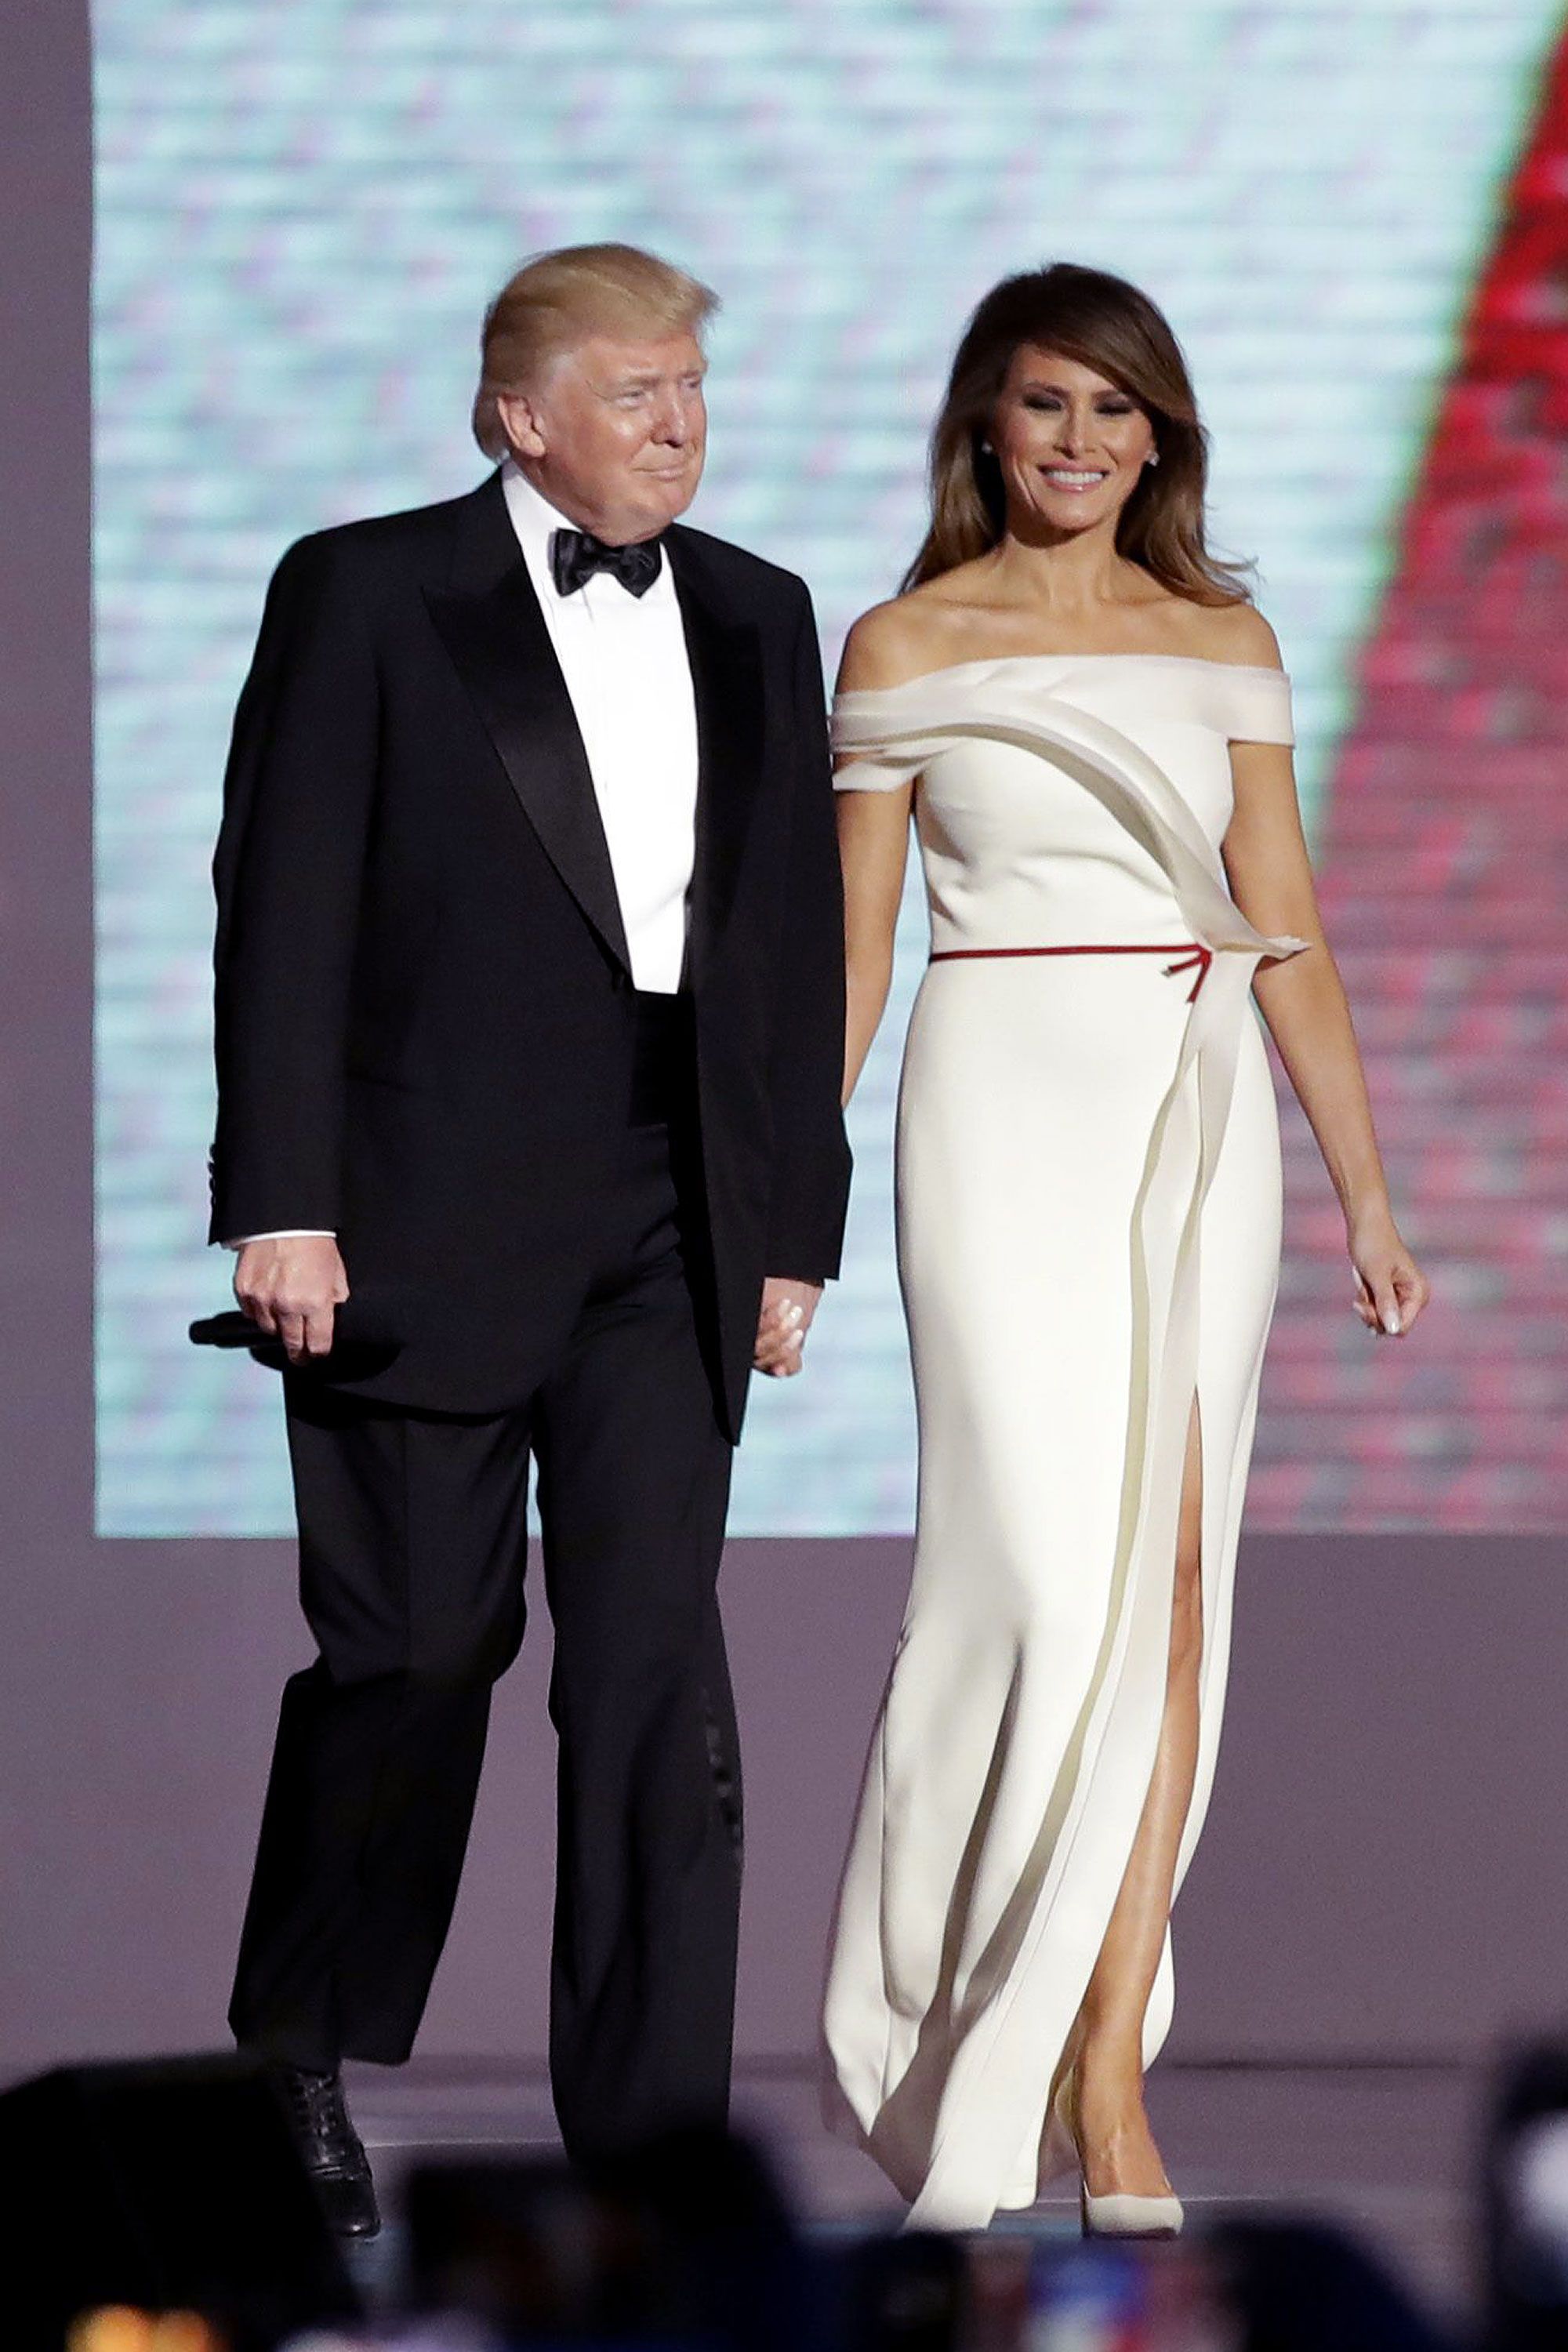 Melania Trump Wears Ralph Lauren for Inauguration Day [PHOTOS]